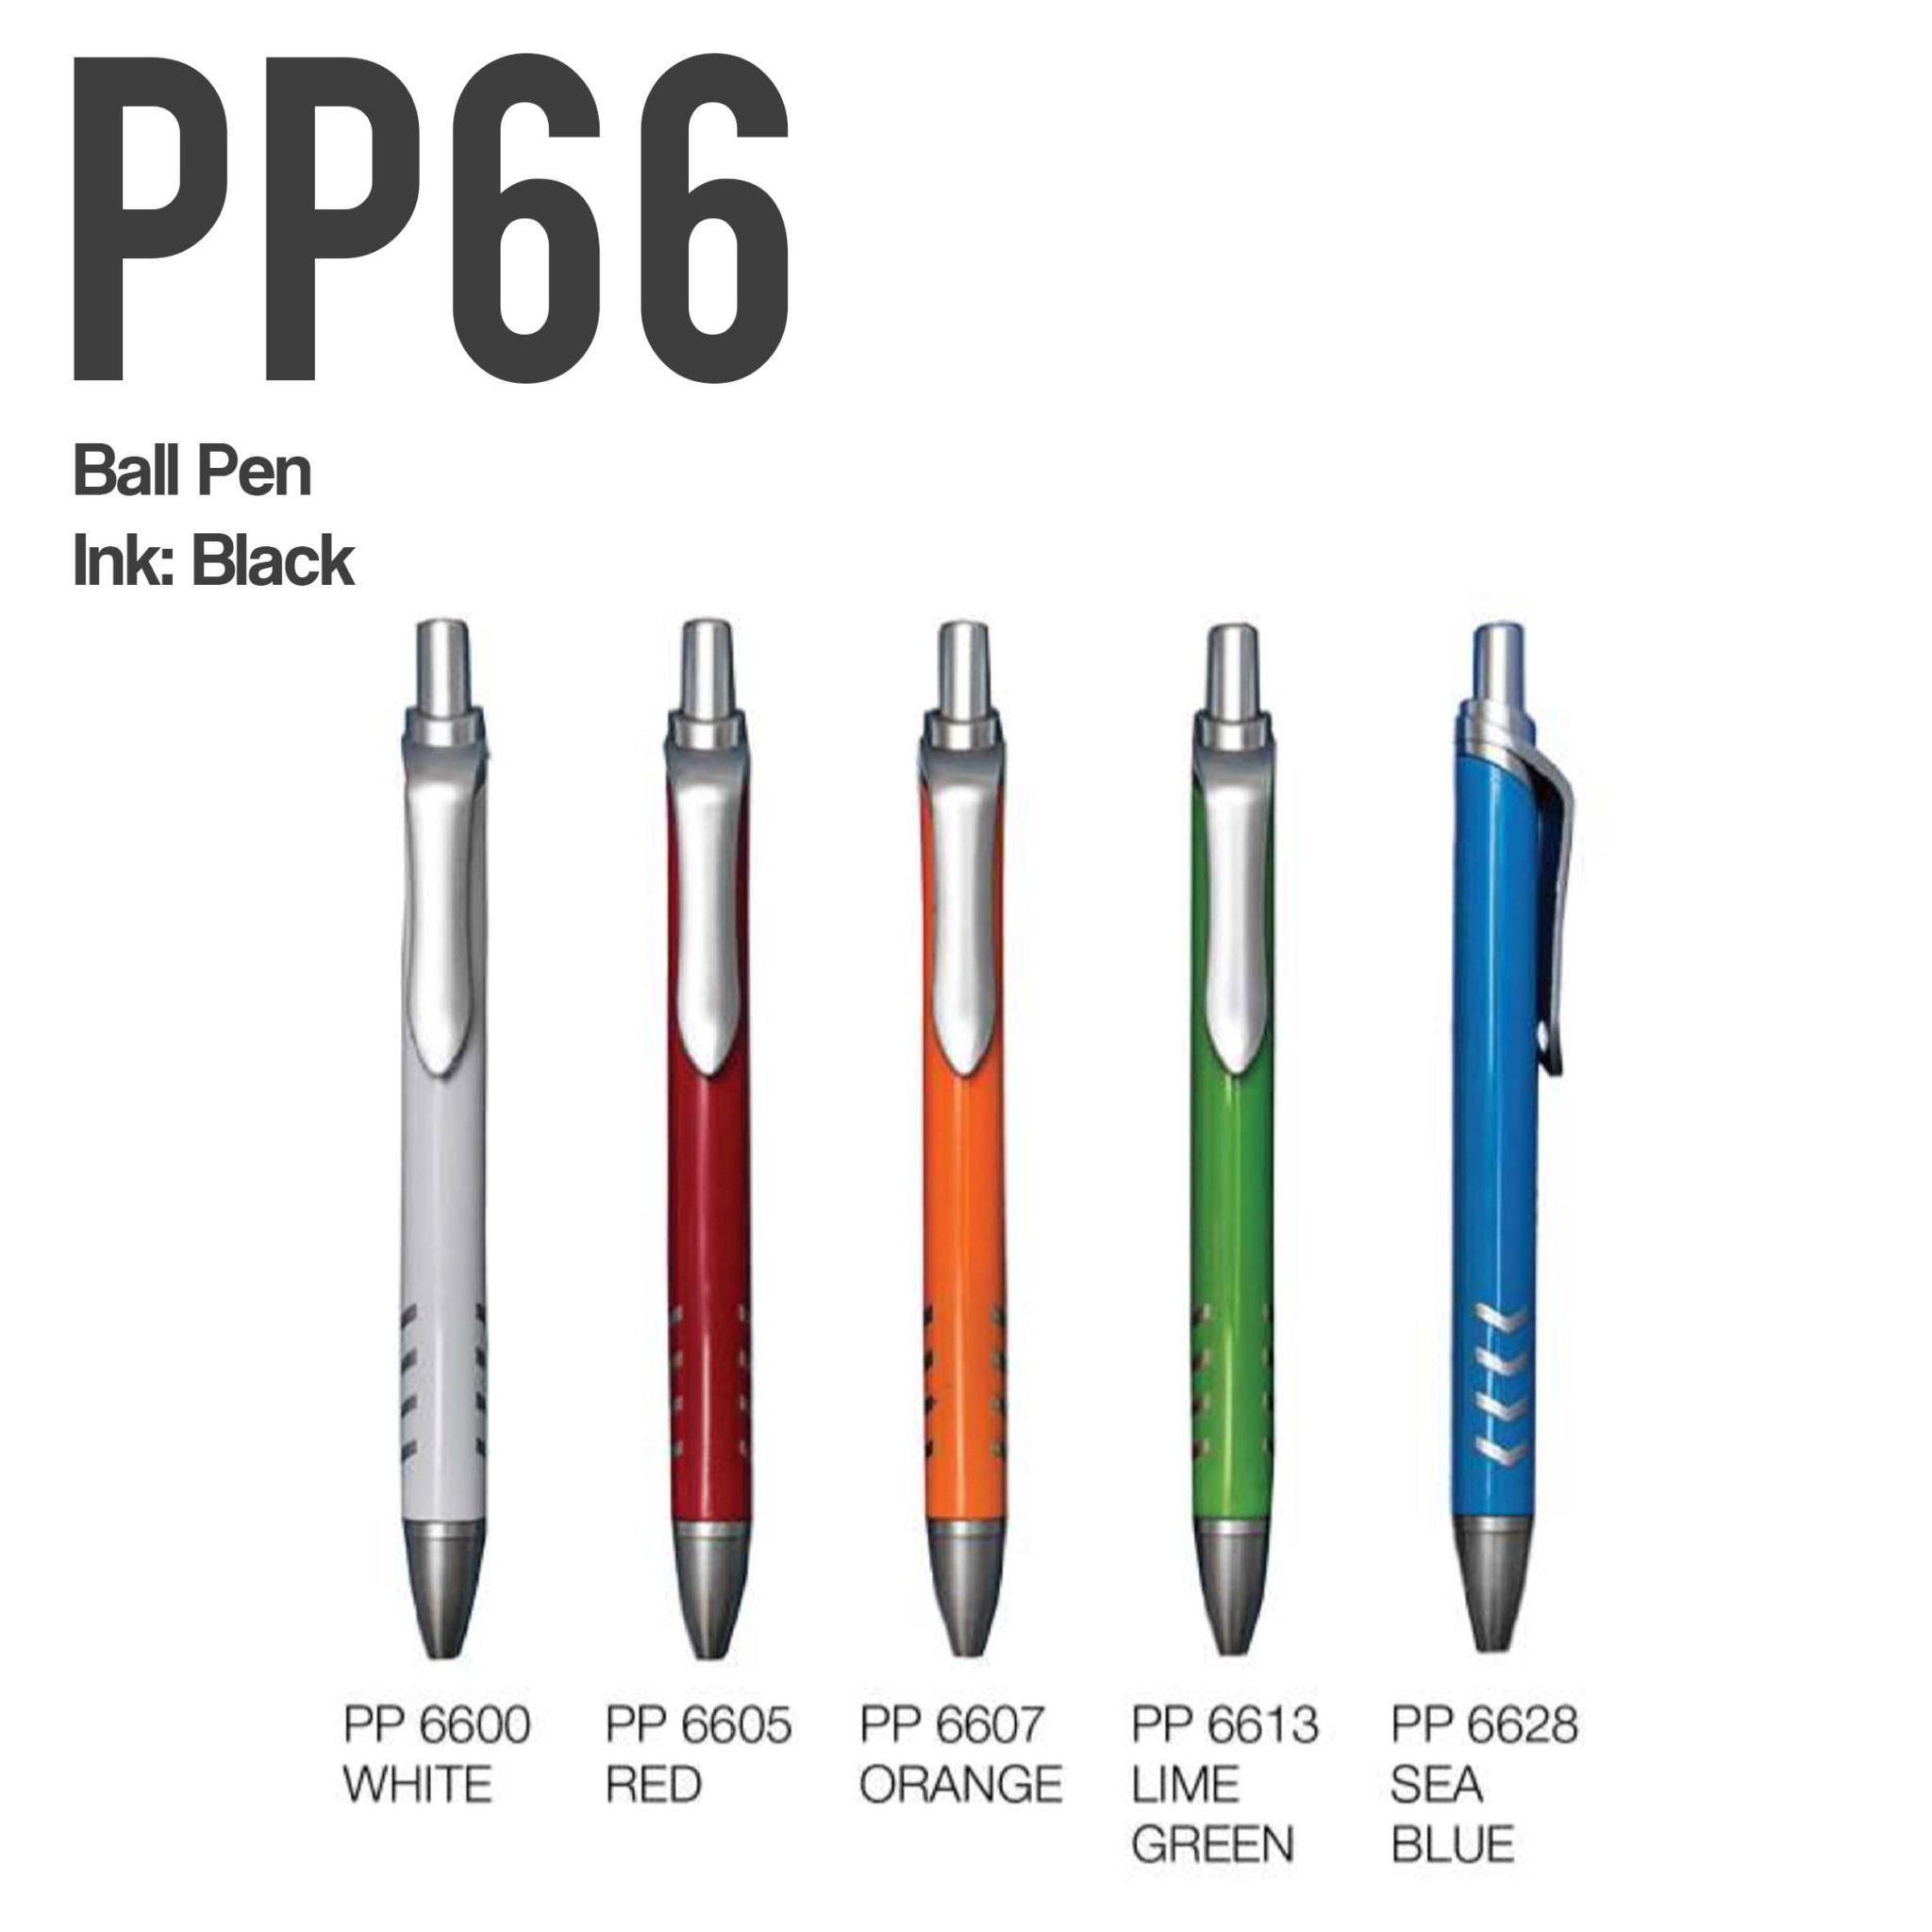 Pp66 plastic pen scaled